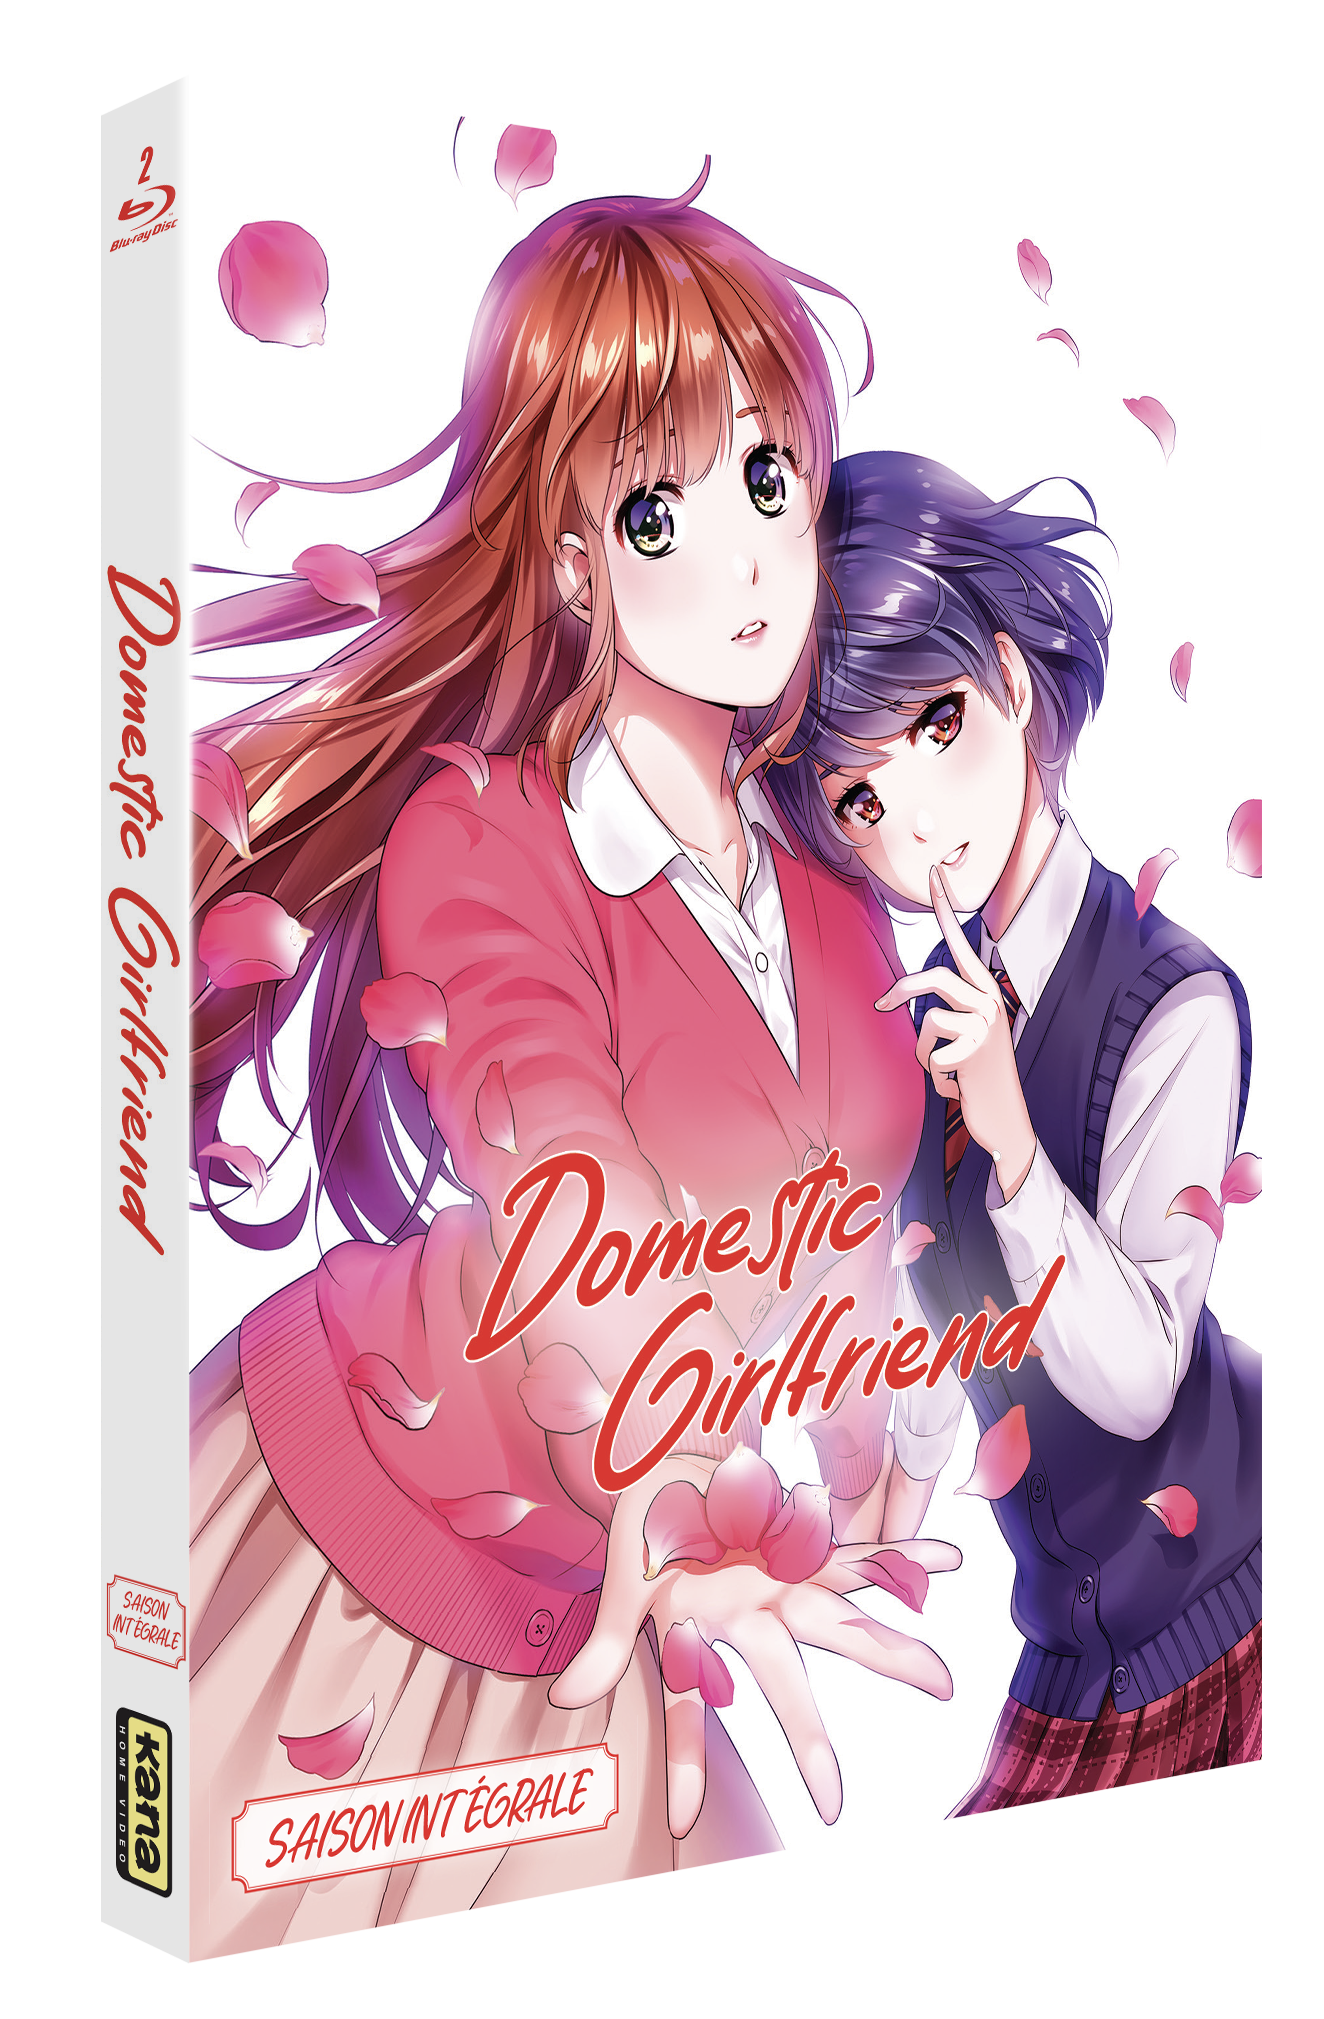 Domestic Girlfriend - Love x Dilemma - Intégrale Blu-ray